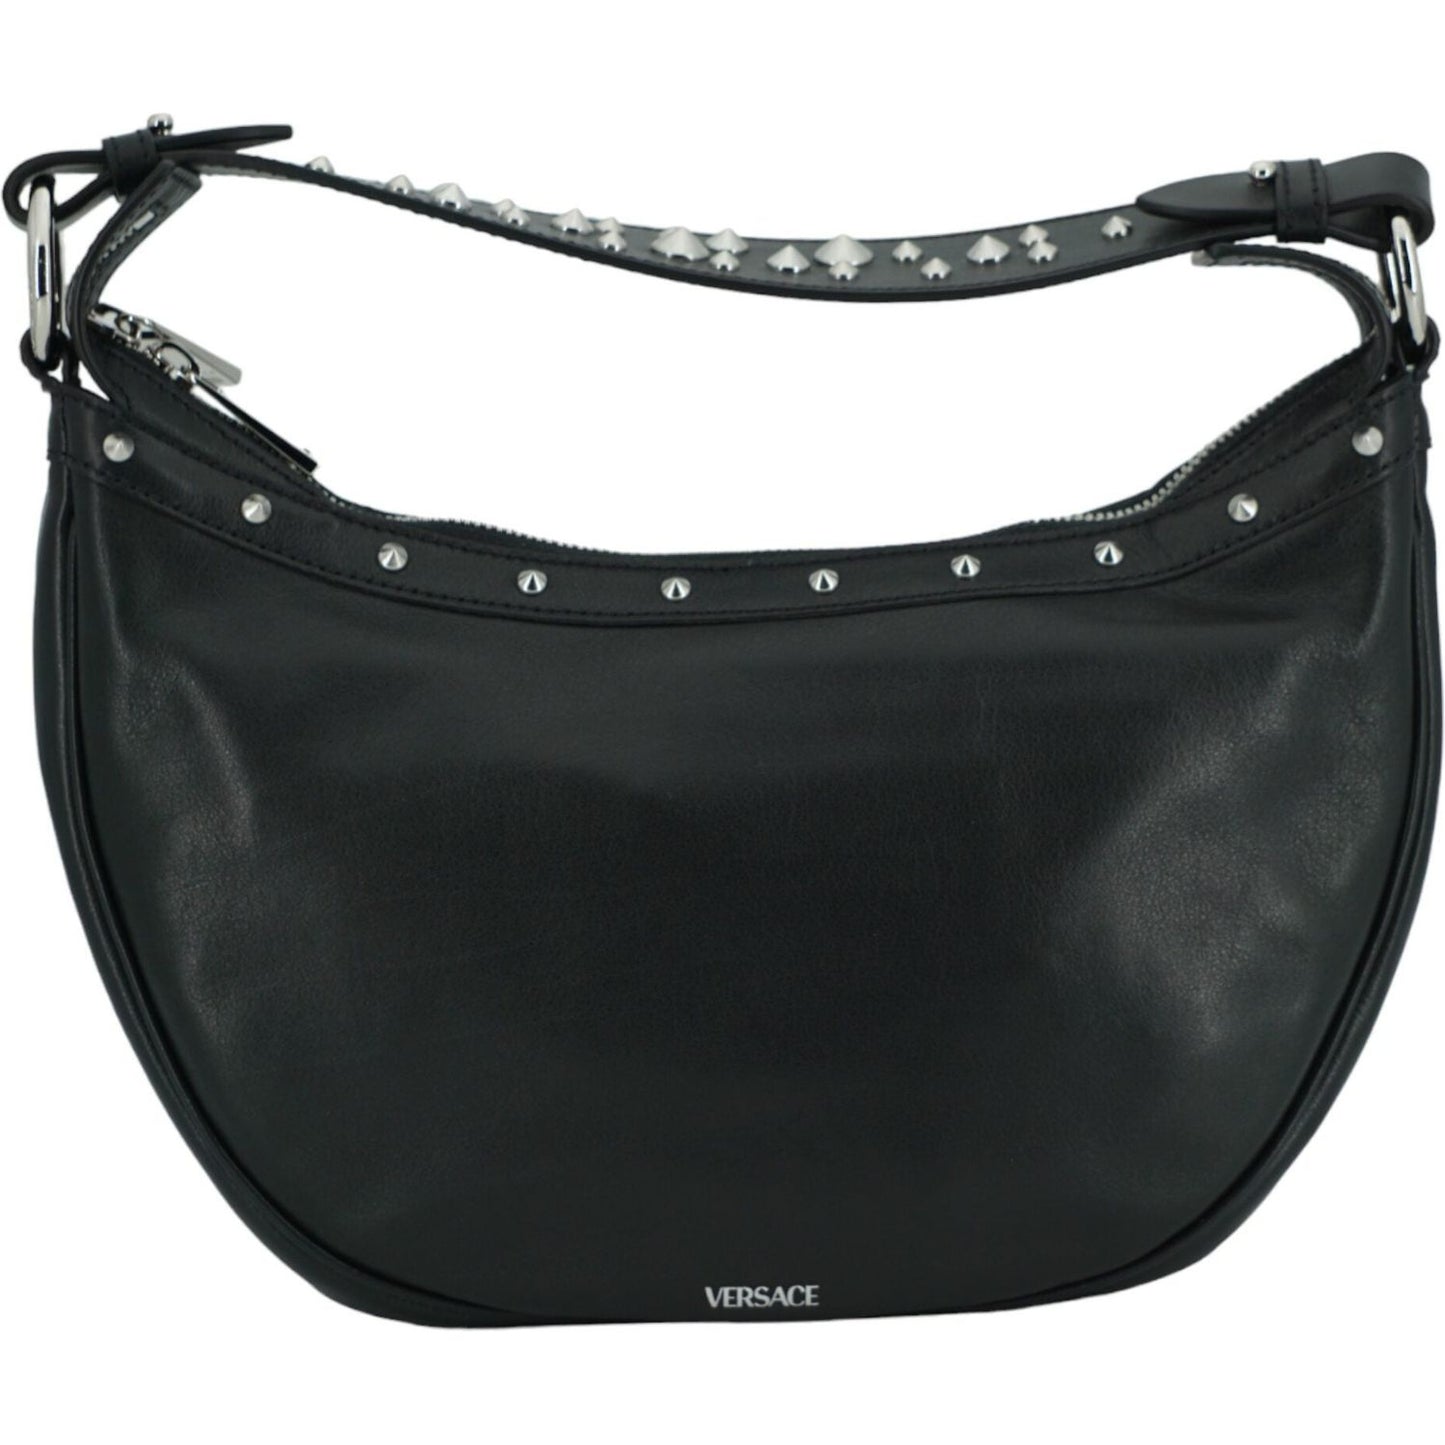 Versace Black Calf Leather Small Hobo Shoulder Bag black-calf-leather-small-hobo-shoulder-bag DSC01171-scaled-3fe41613-c4e.jpg